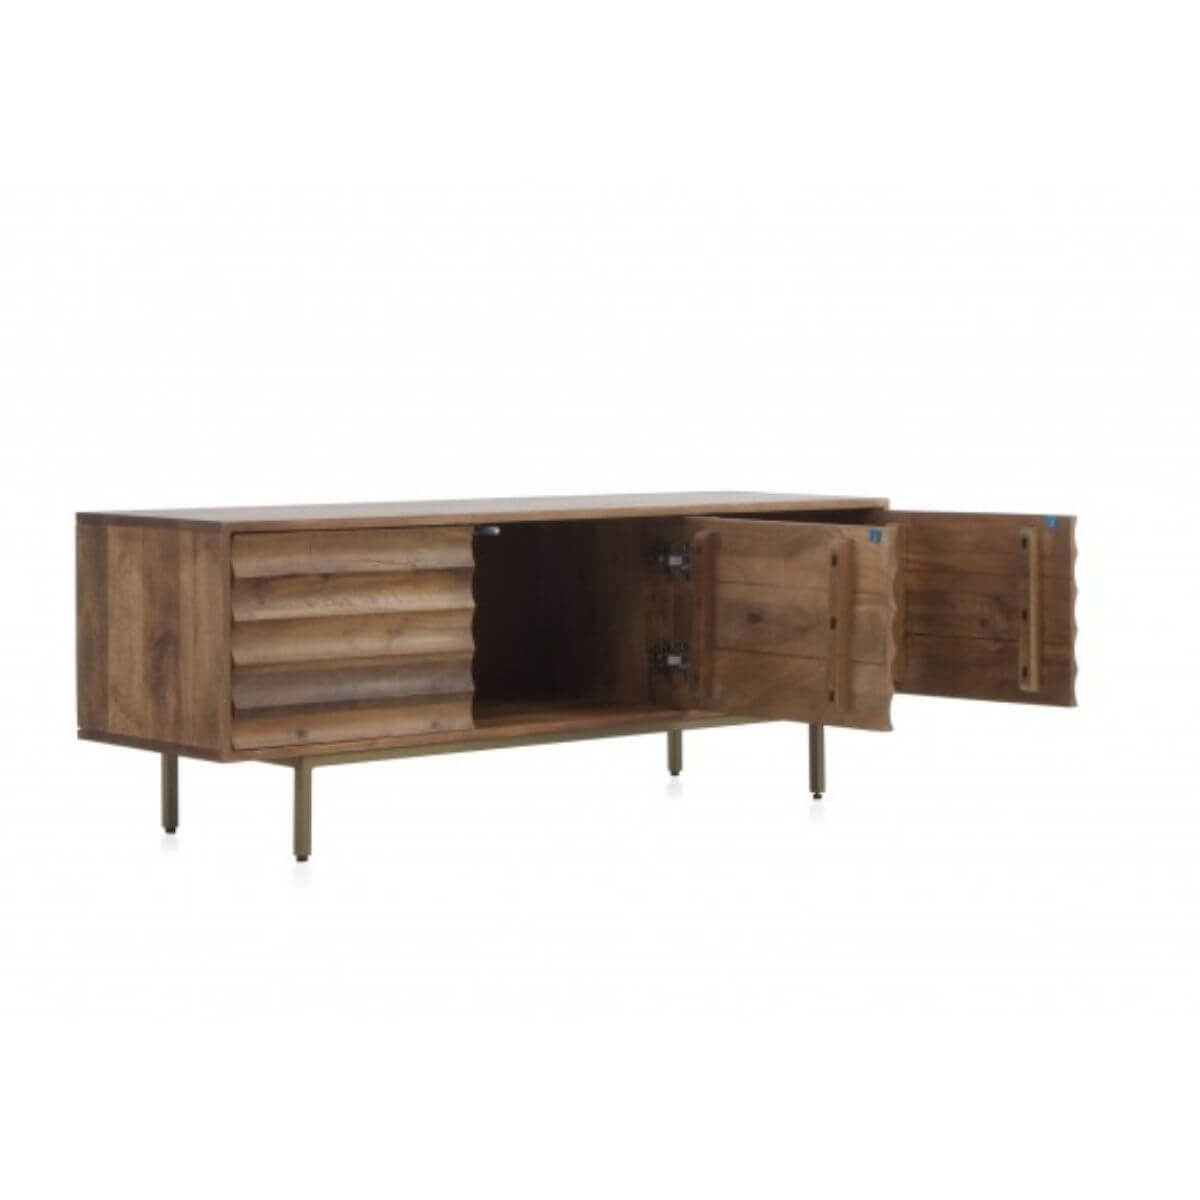 Aparador madera maciza de acacia - Artikalia - Muebles de diseño